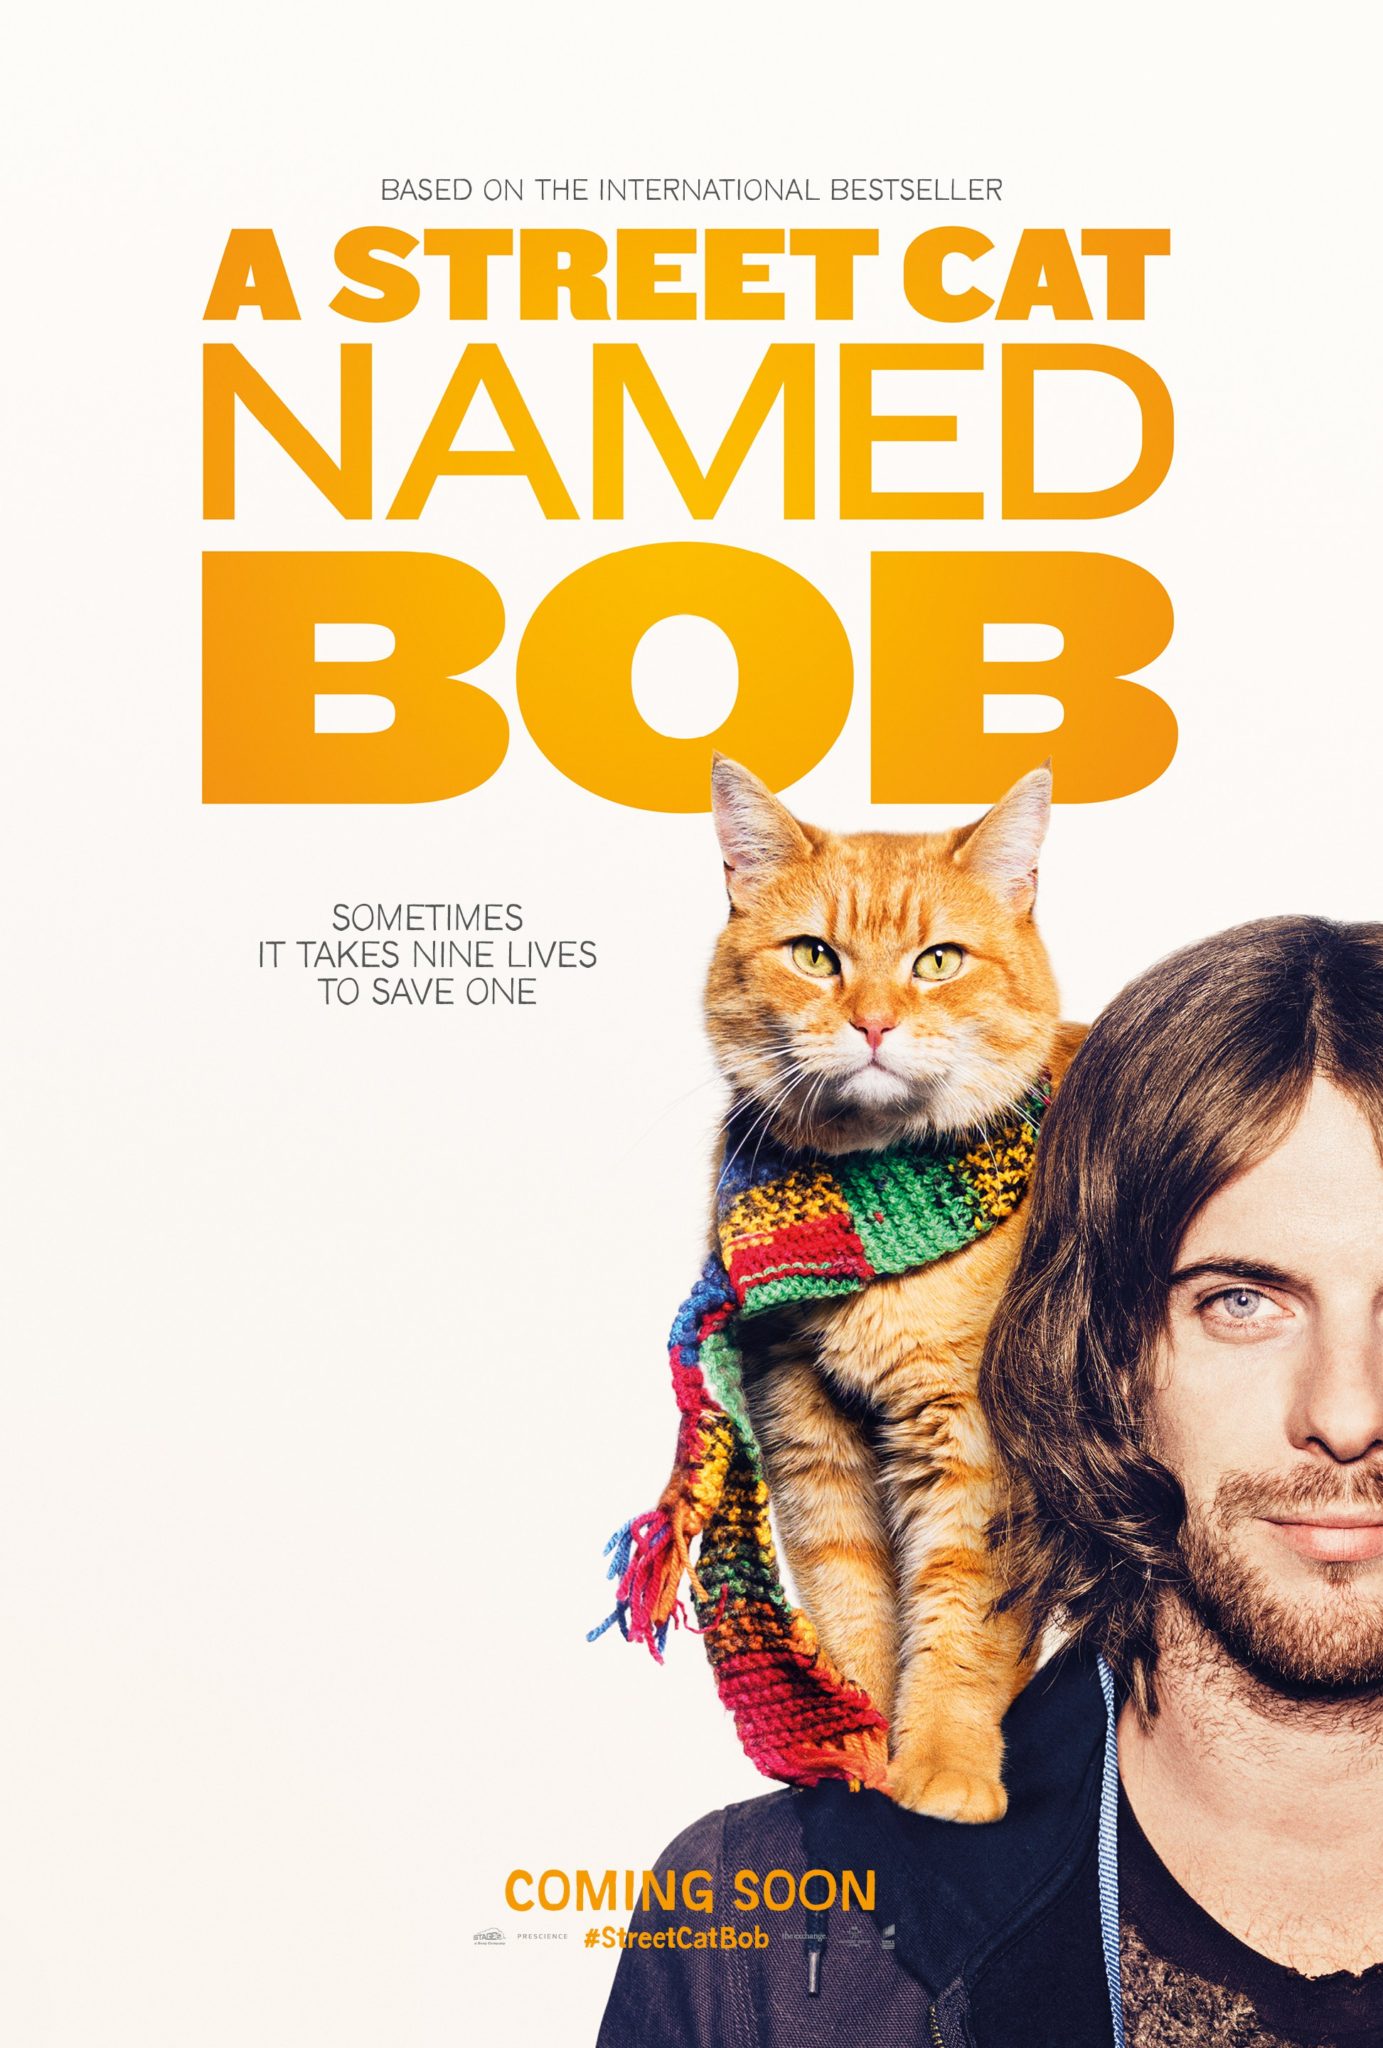 A Street Cat Named Bob review